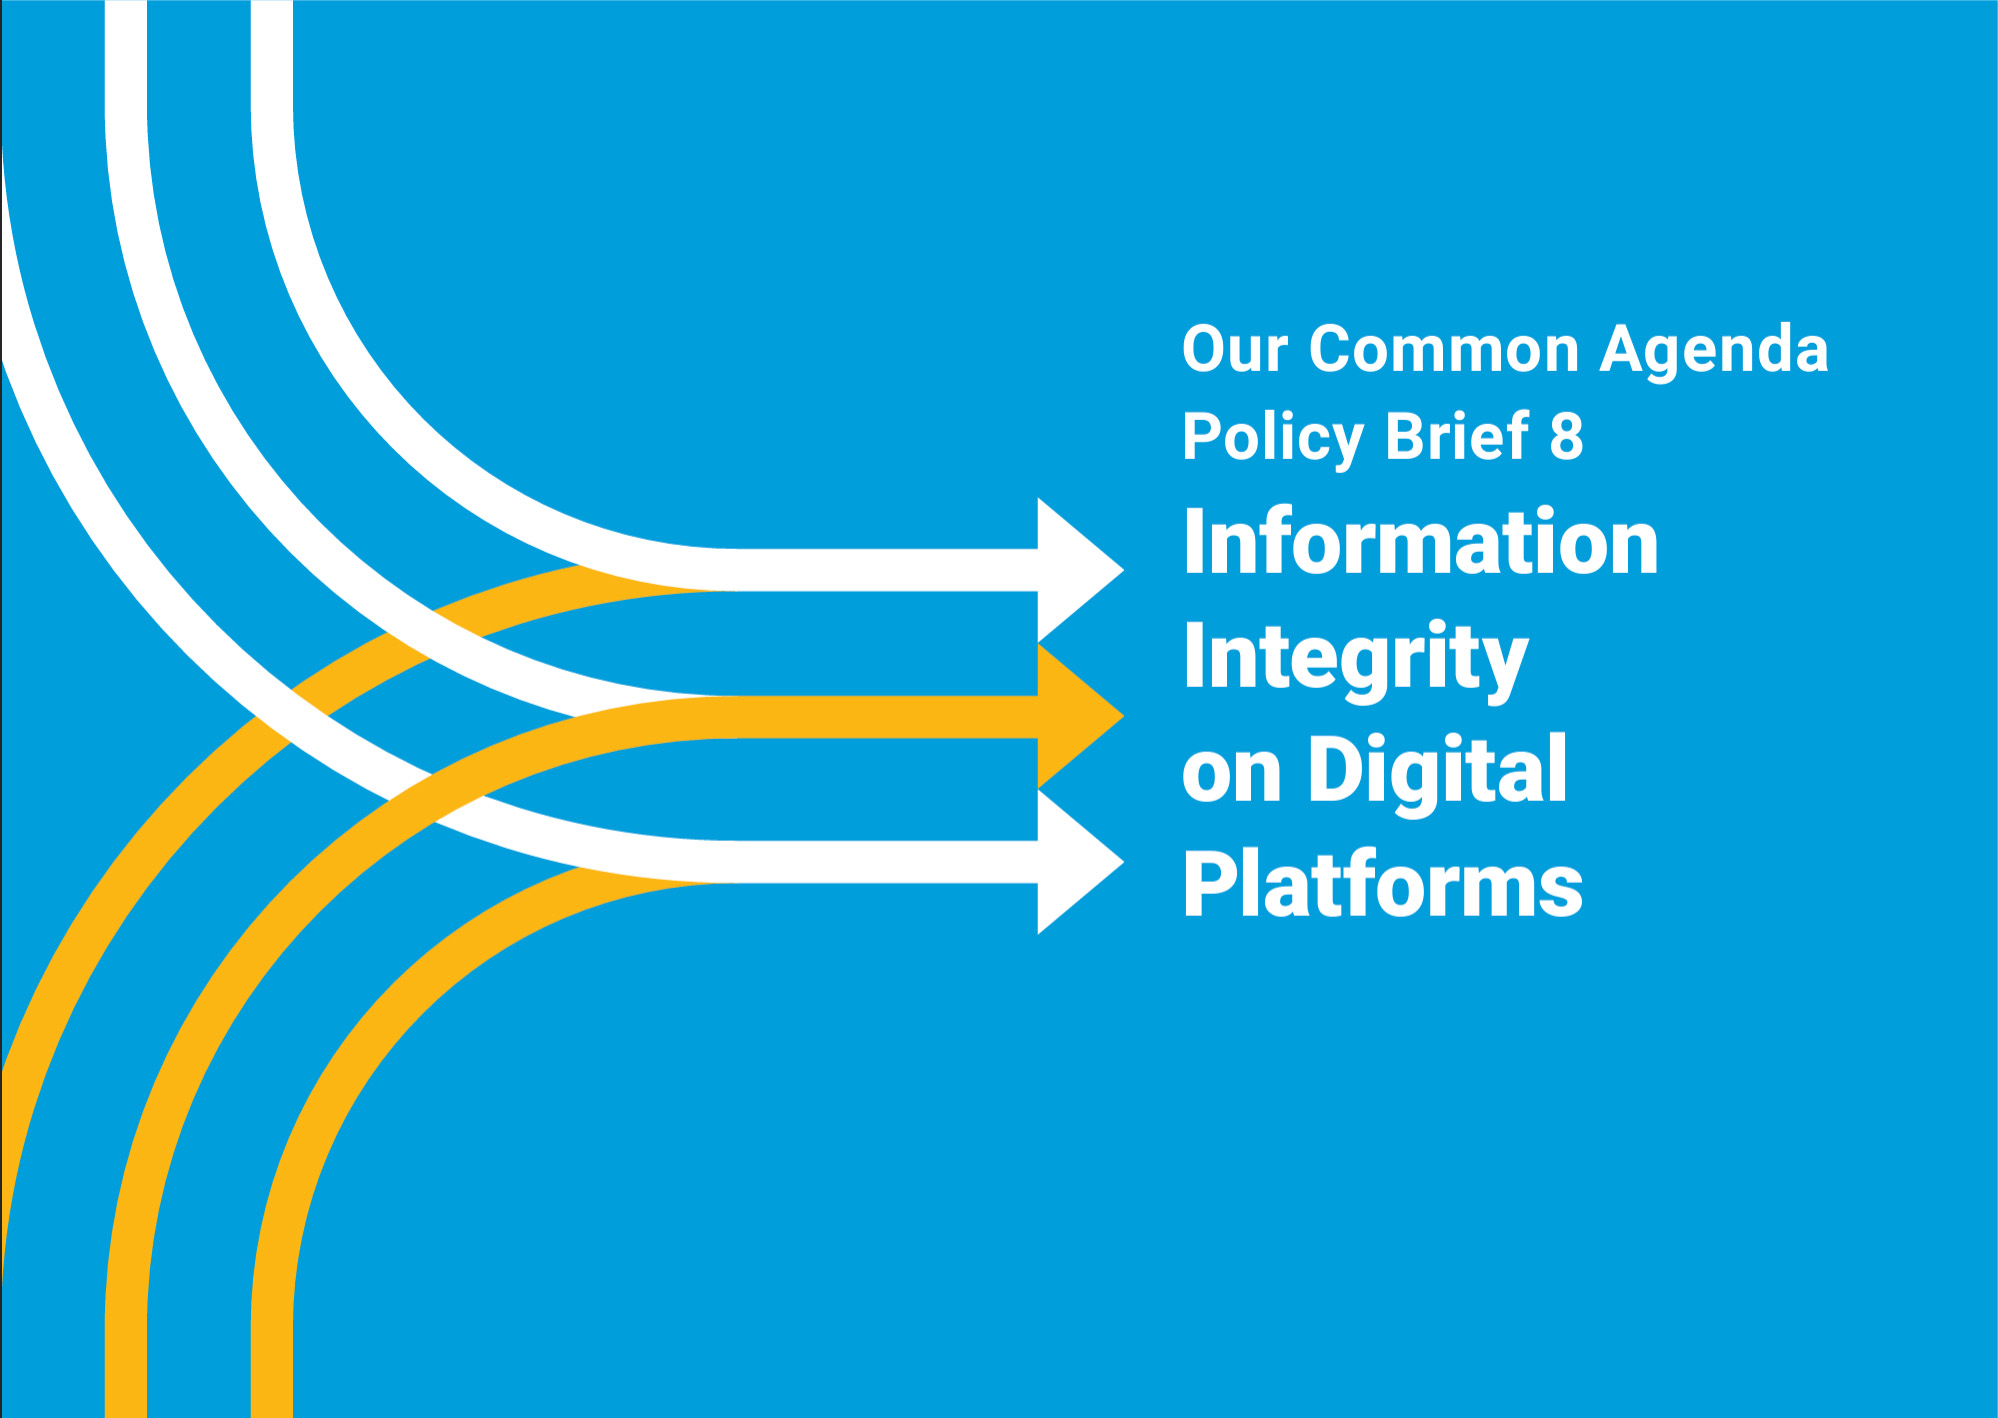 Information Integrity on Digital Platforms